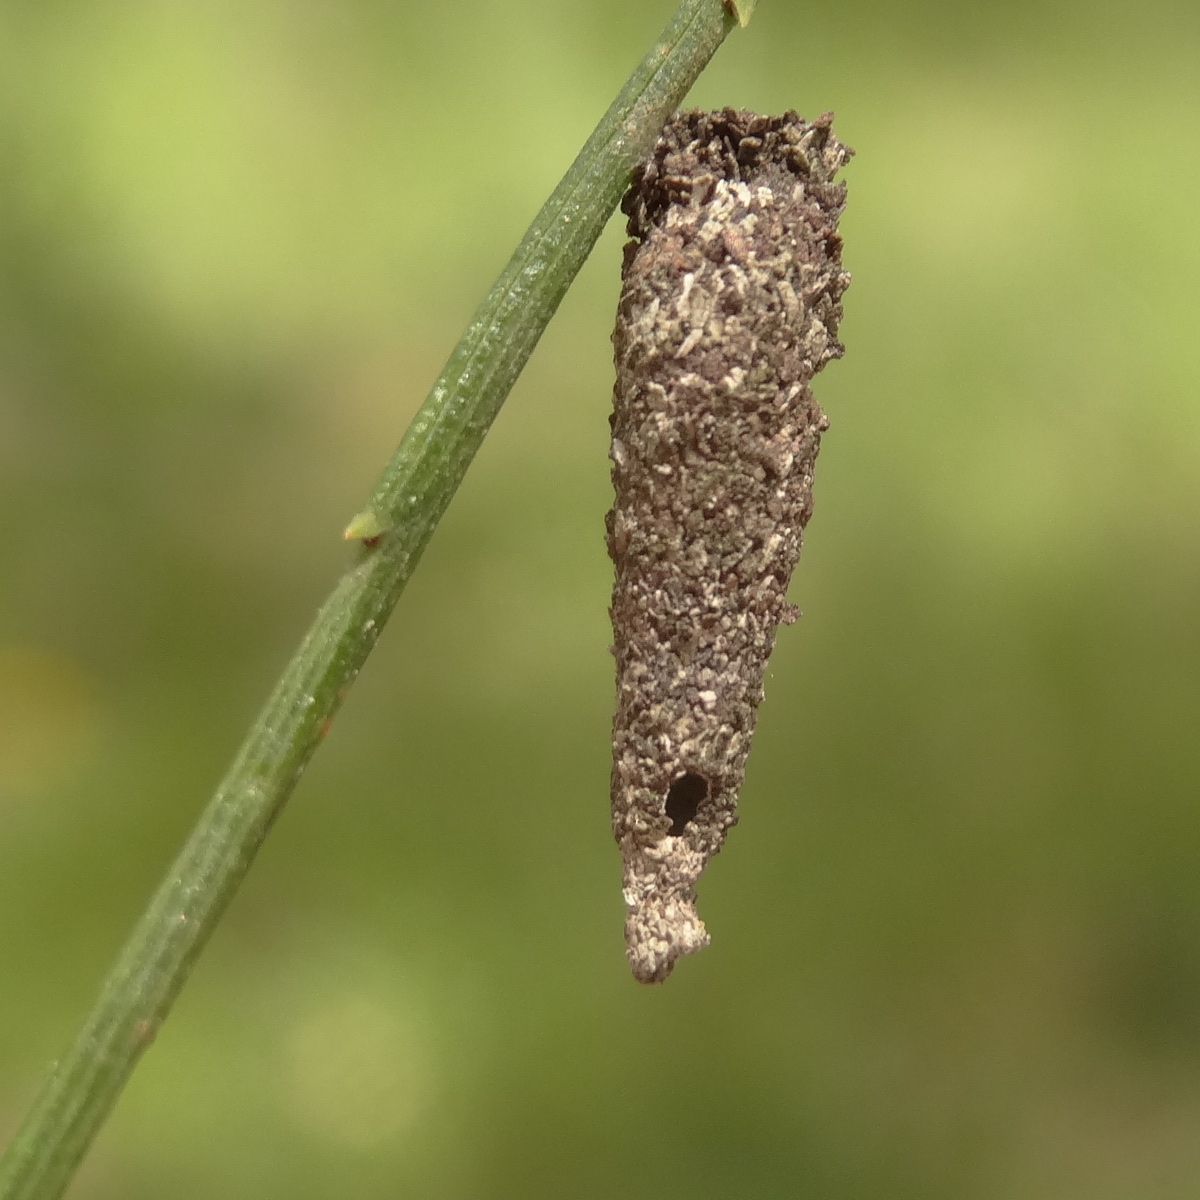 Casemoth or caddis larva?